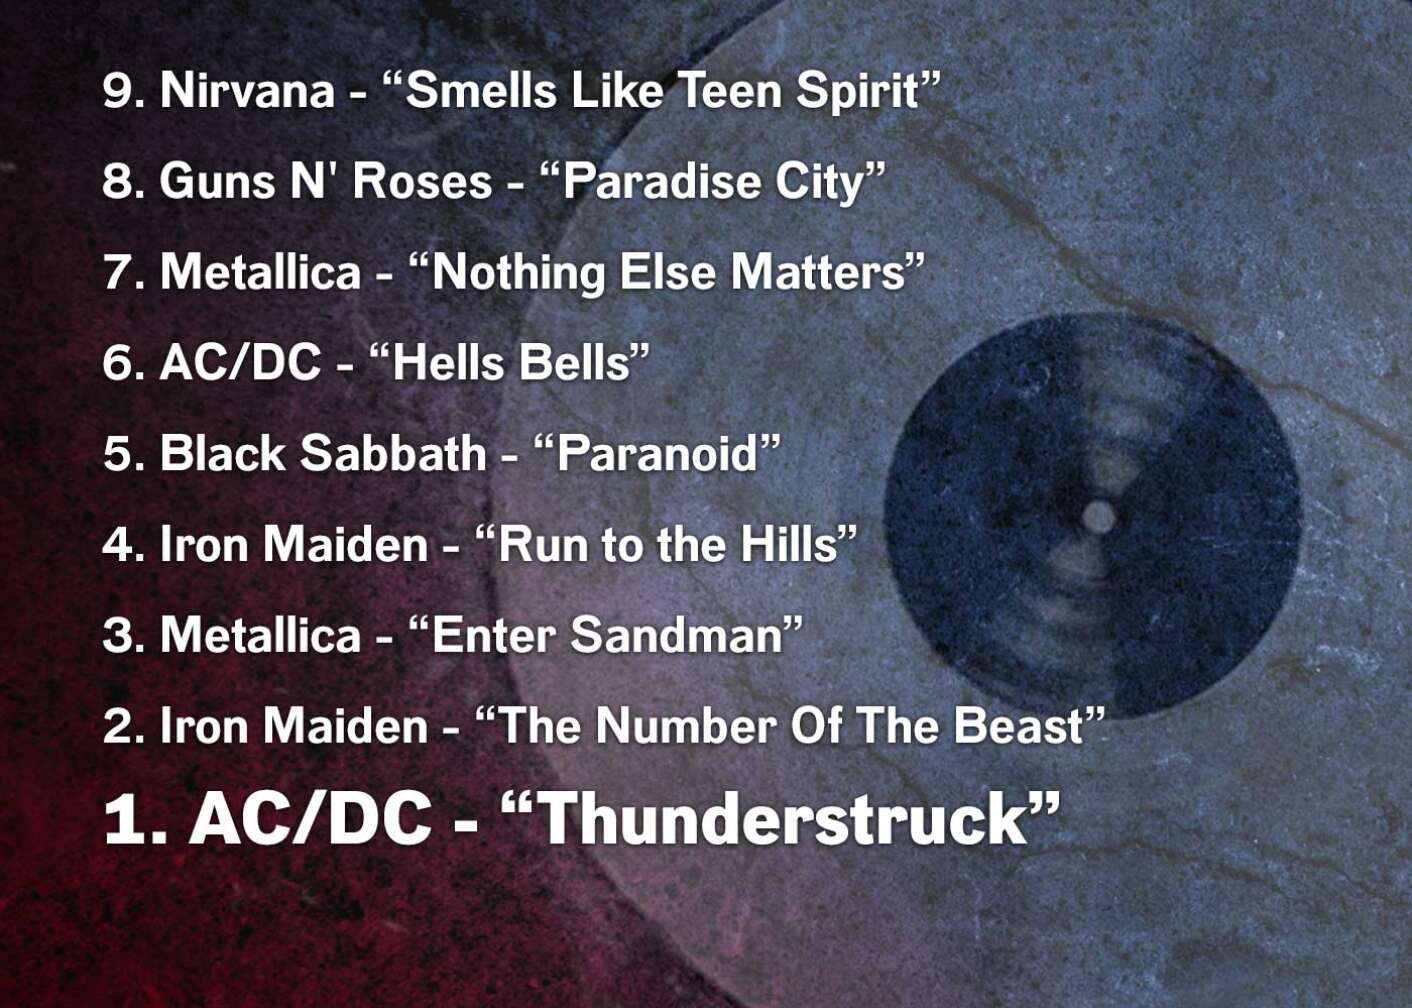 9. Nirvana - “Smells Like Teen Spirit” 8. Guns N' Roses - “Paradise City” 7. Metallica - “Nothing Else Matters” 6. AC/DC - “Hells Bells” 5. Black Sabbath - “Paranoid” 4. Iron Maiden - “Run to the Hills” 3. Metallica - “Enter Sandman” 2. Iron Maiden - “The Number Of The Beast” 1. AC/DC - “Thunderstruck”